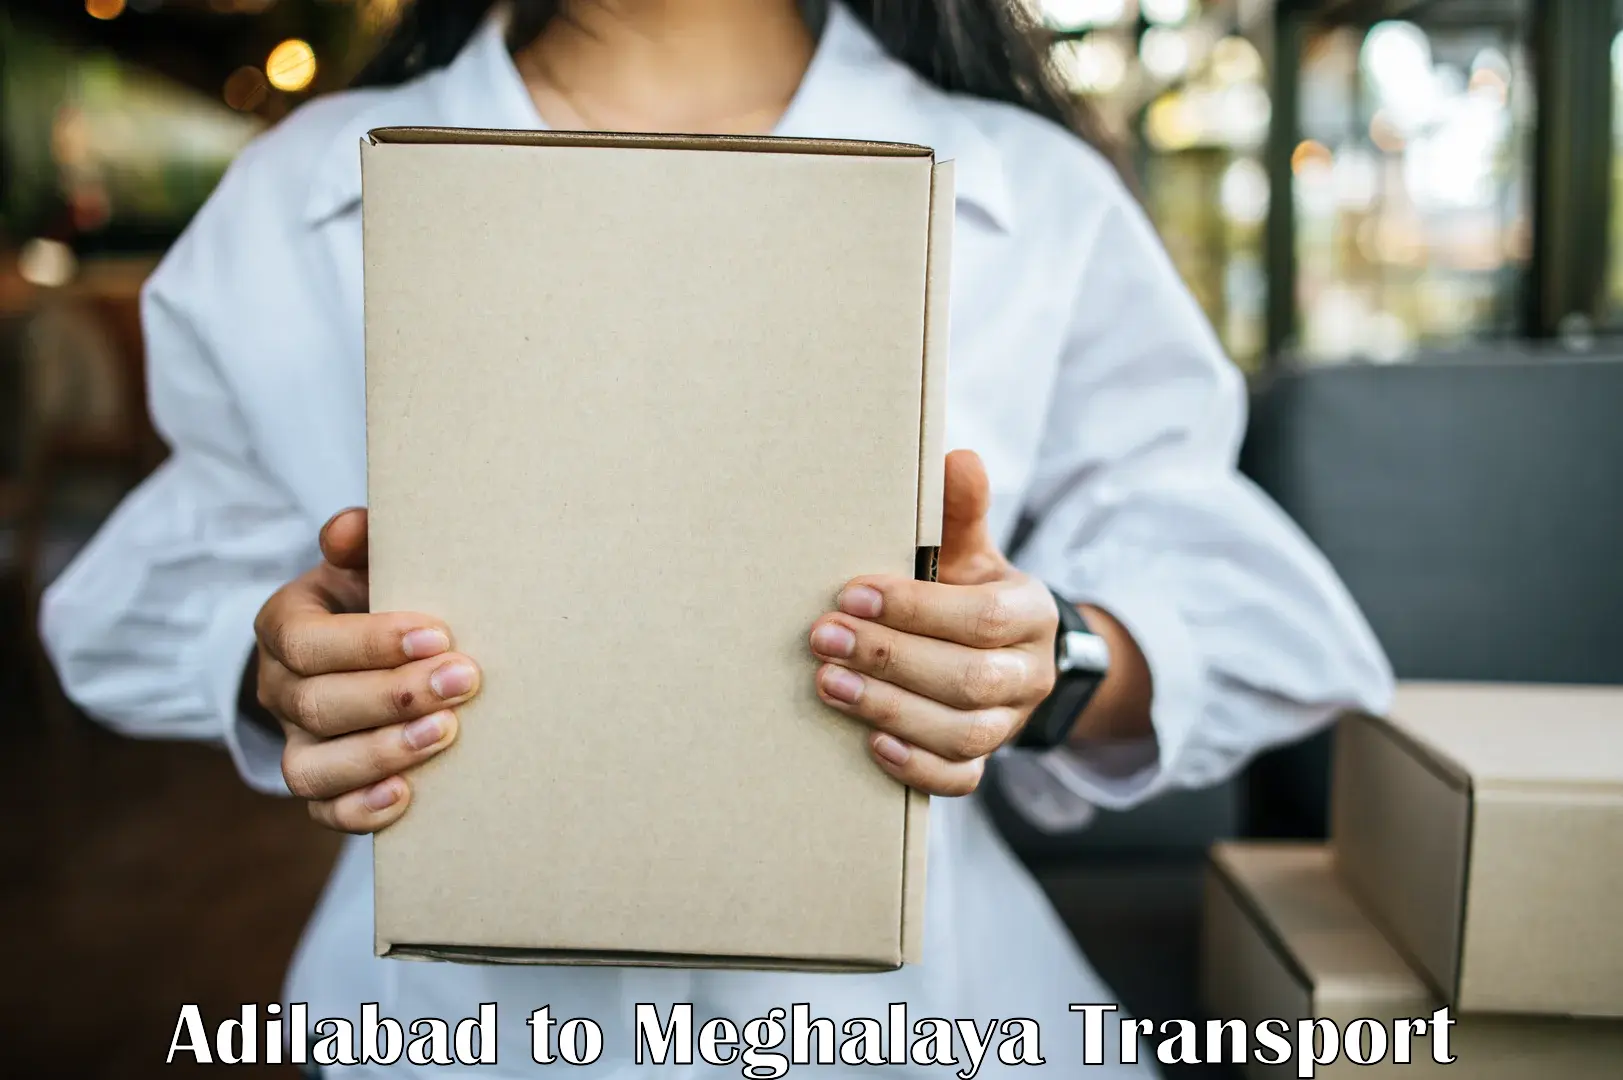 Truck transport companies in India Adilabad to Meghalaya